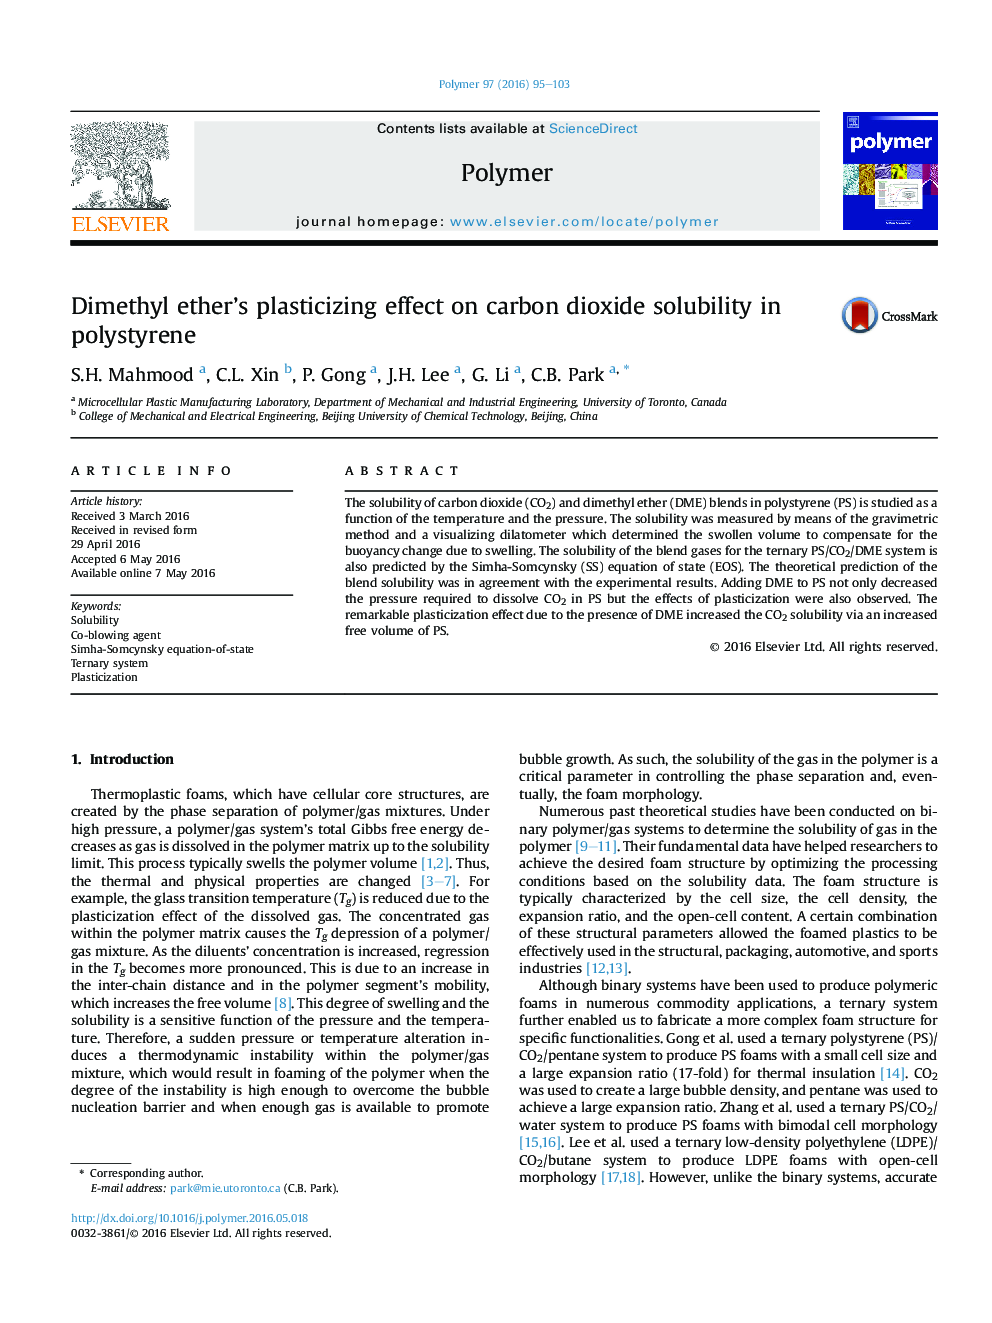 Dimethyl ether's plasticizing effect on carbon dioxide solubility in polystyrene